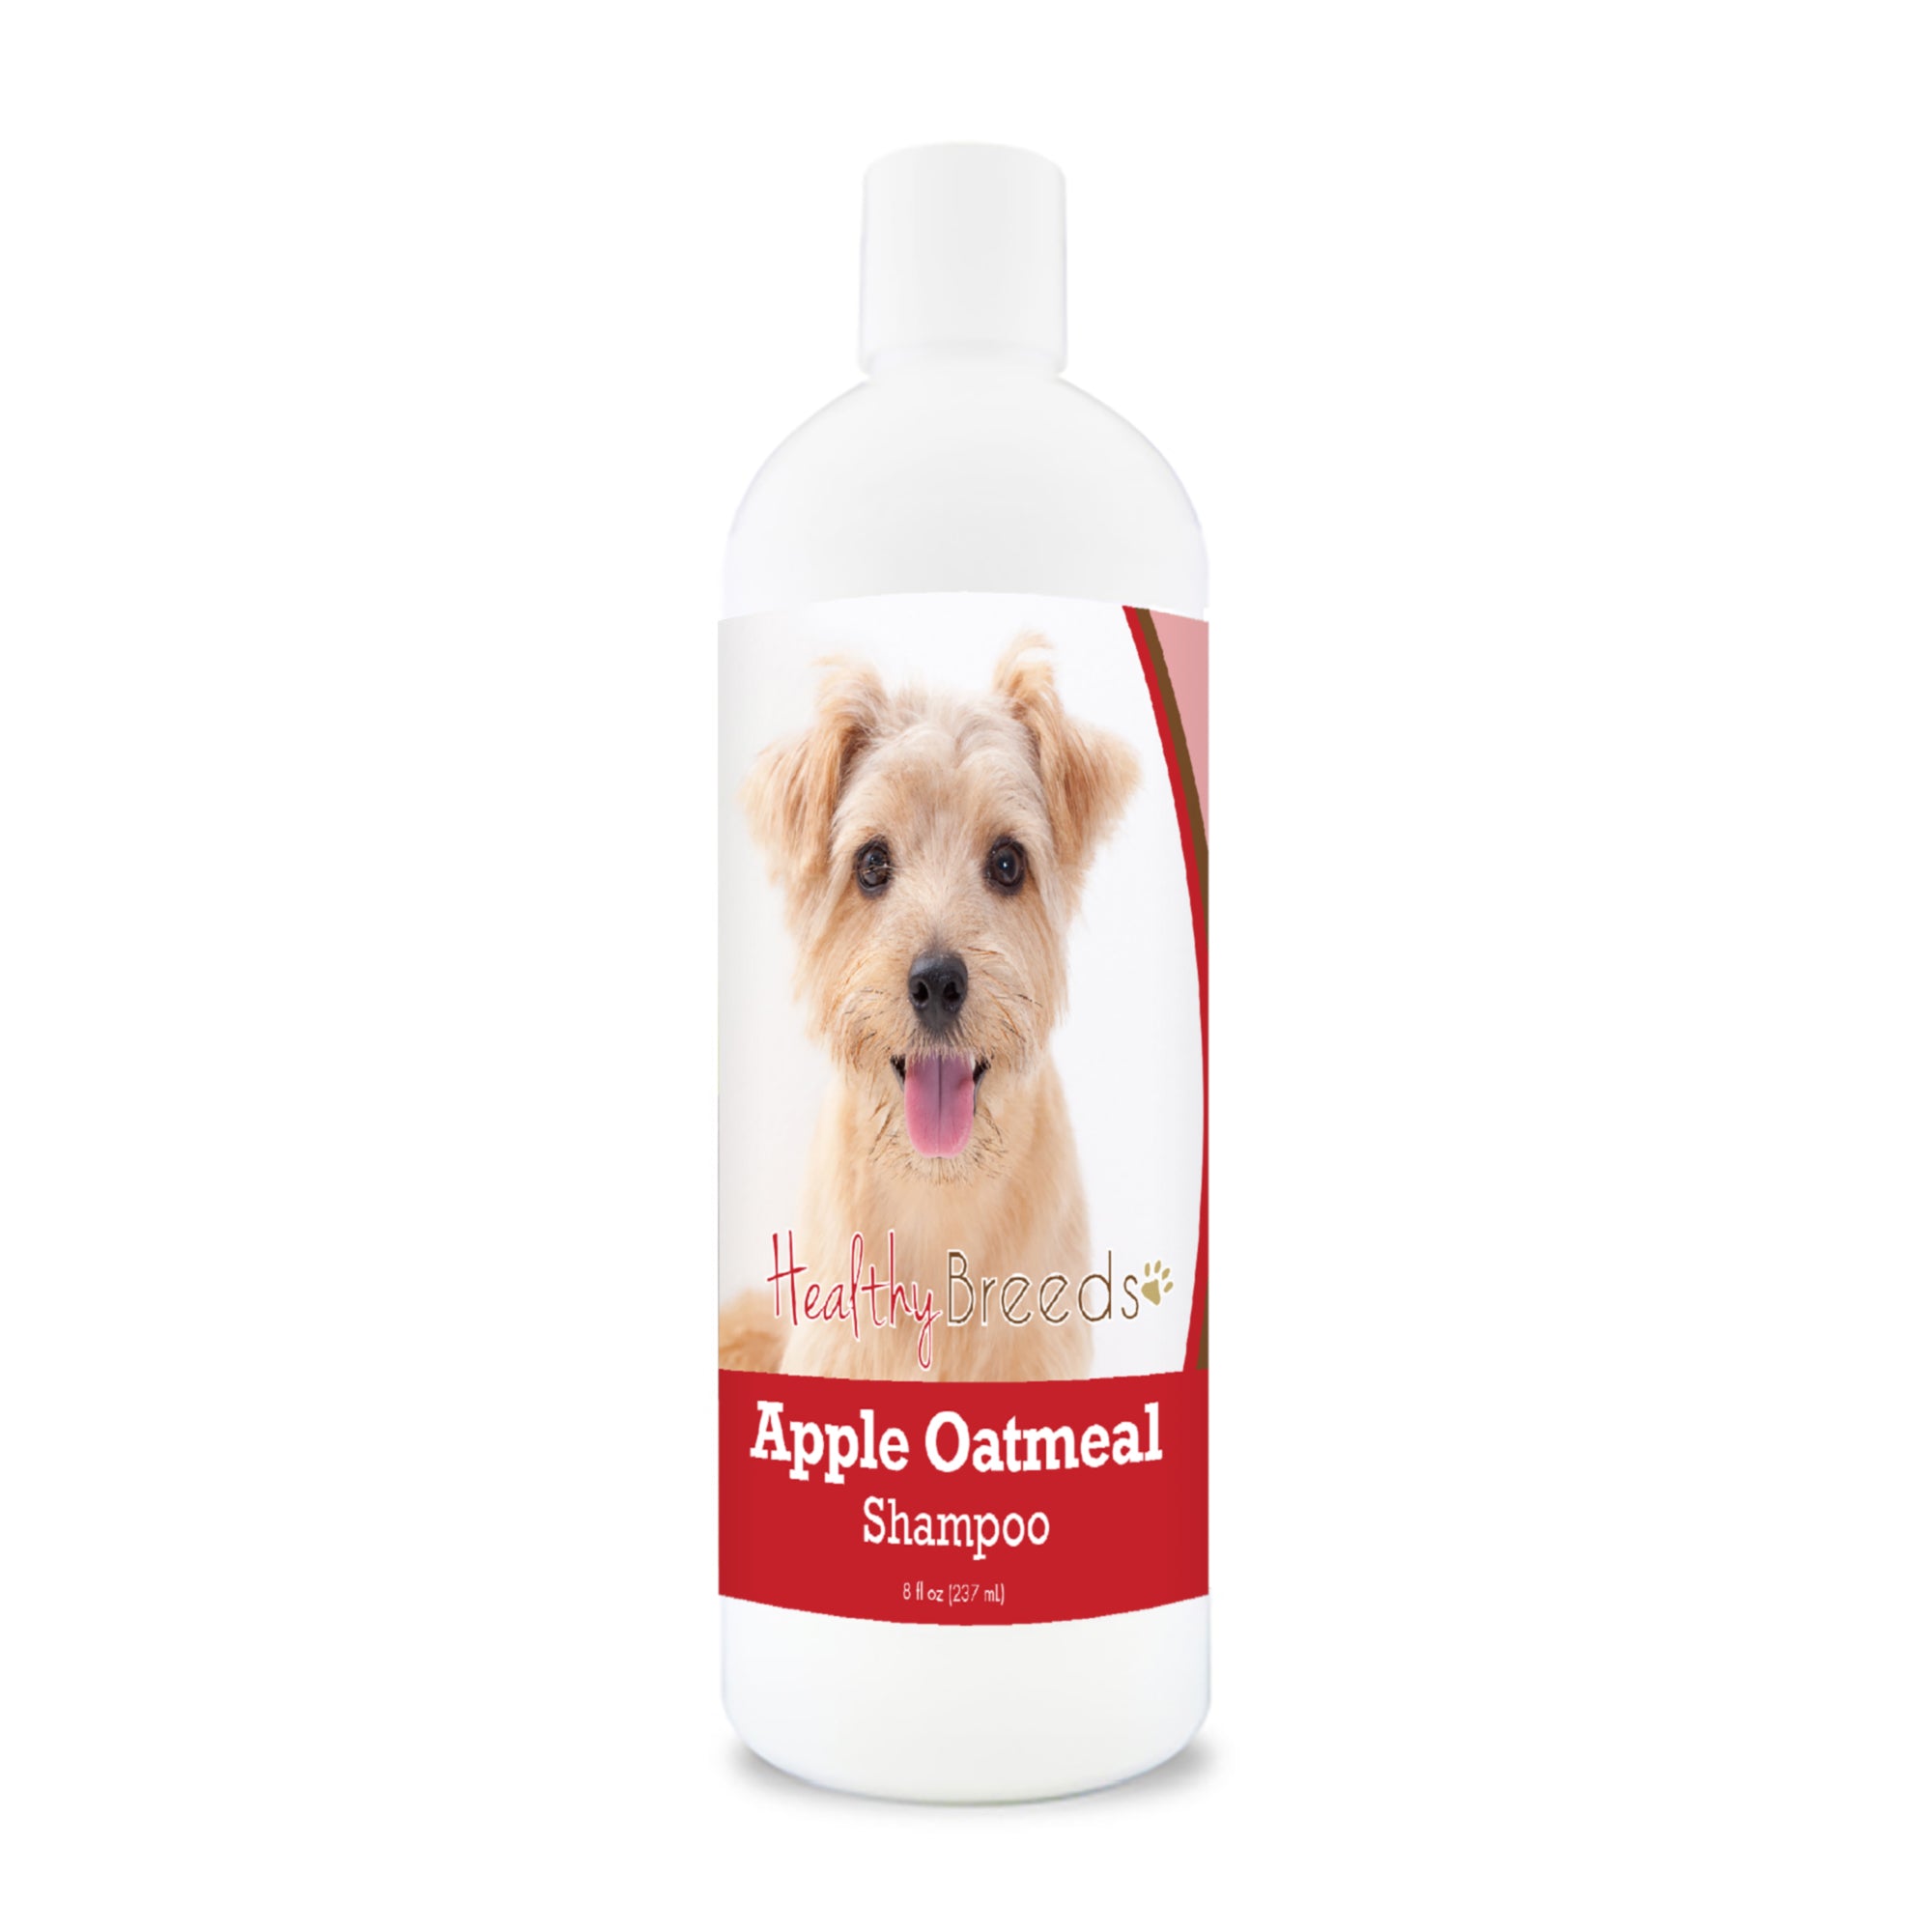 Norfolk Terrier Apple Oatmeal Shampoo 8 oz